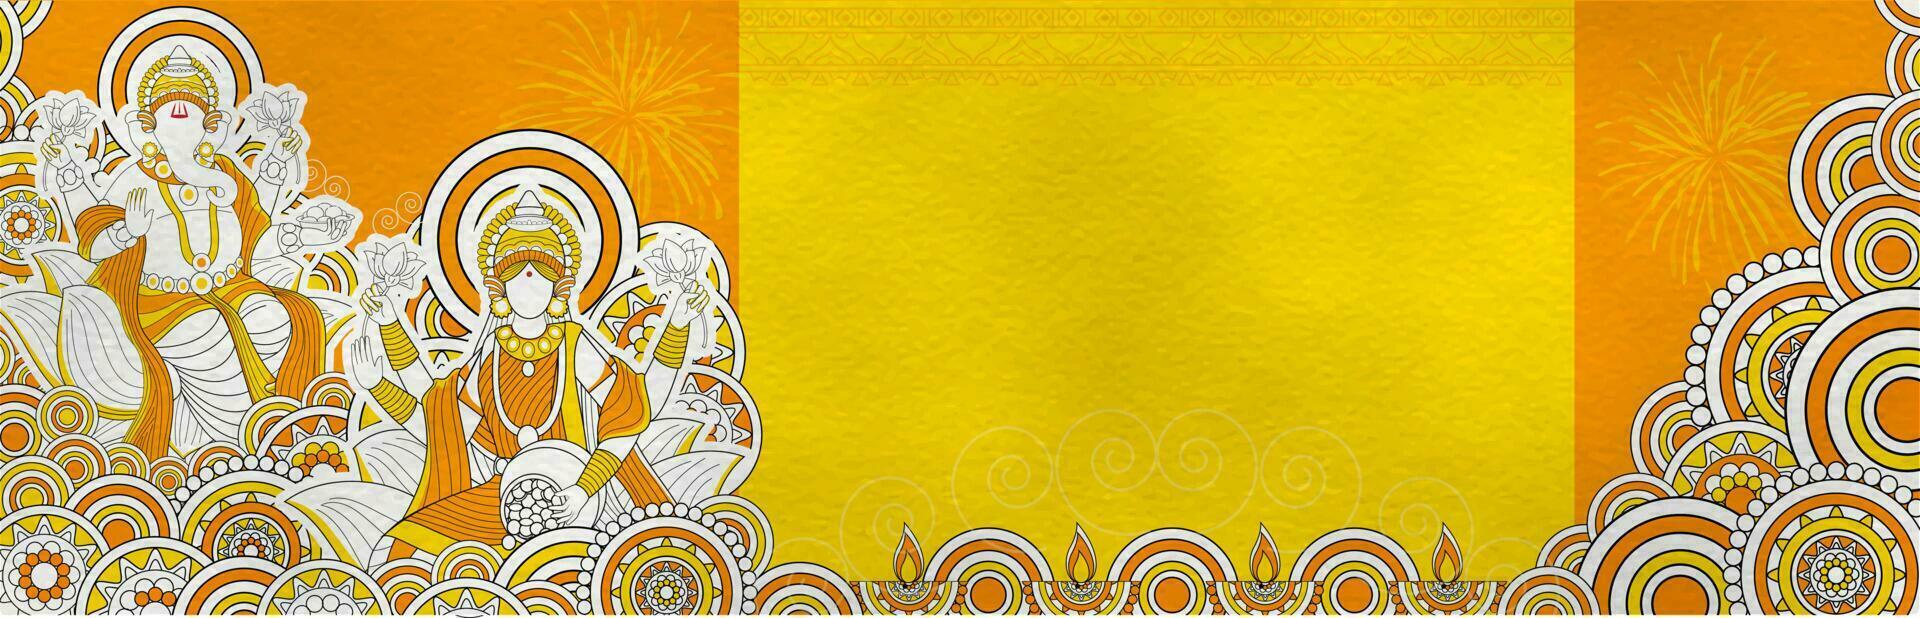 Line art style illustration of Goddess Lakshmi and Lord Ganesha on floral and oil-lit lamp abstract pattern background for Diwali Festival celebration. Header or banner design. vector